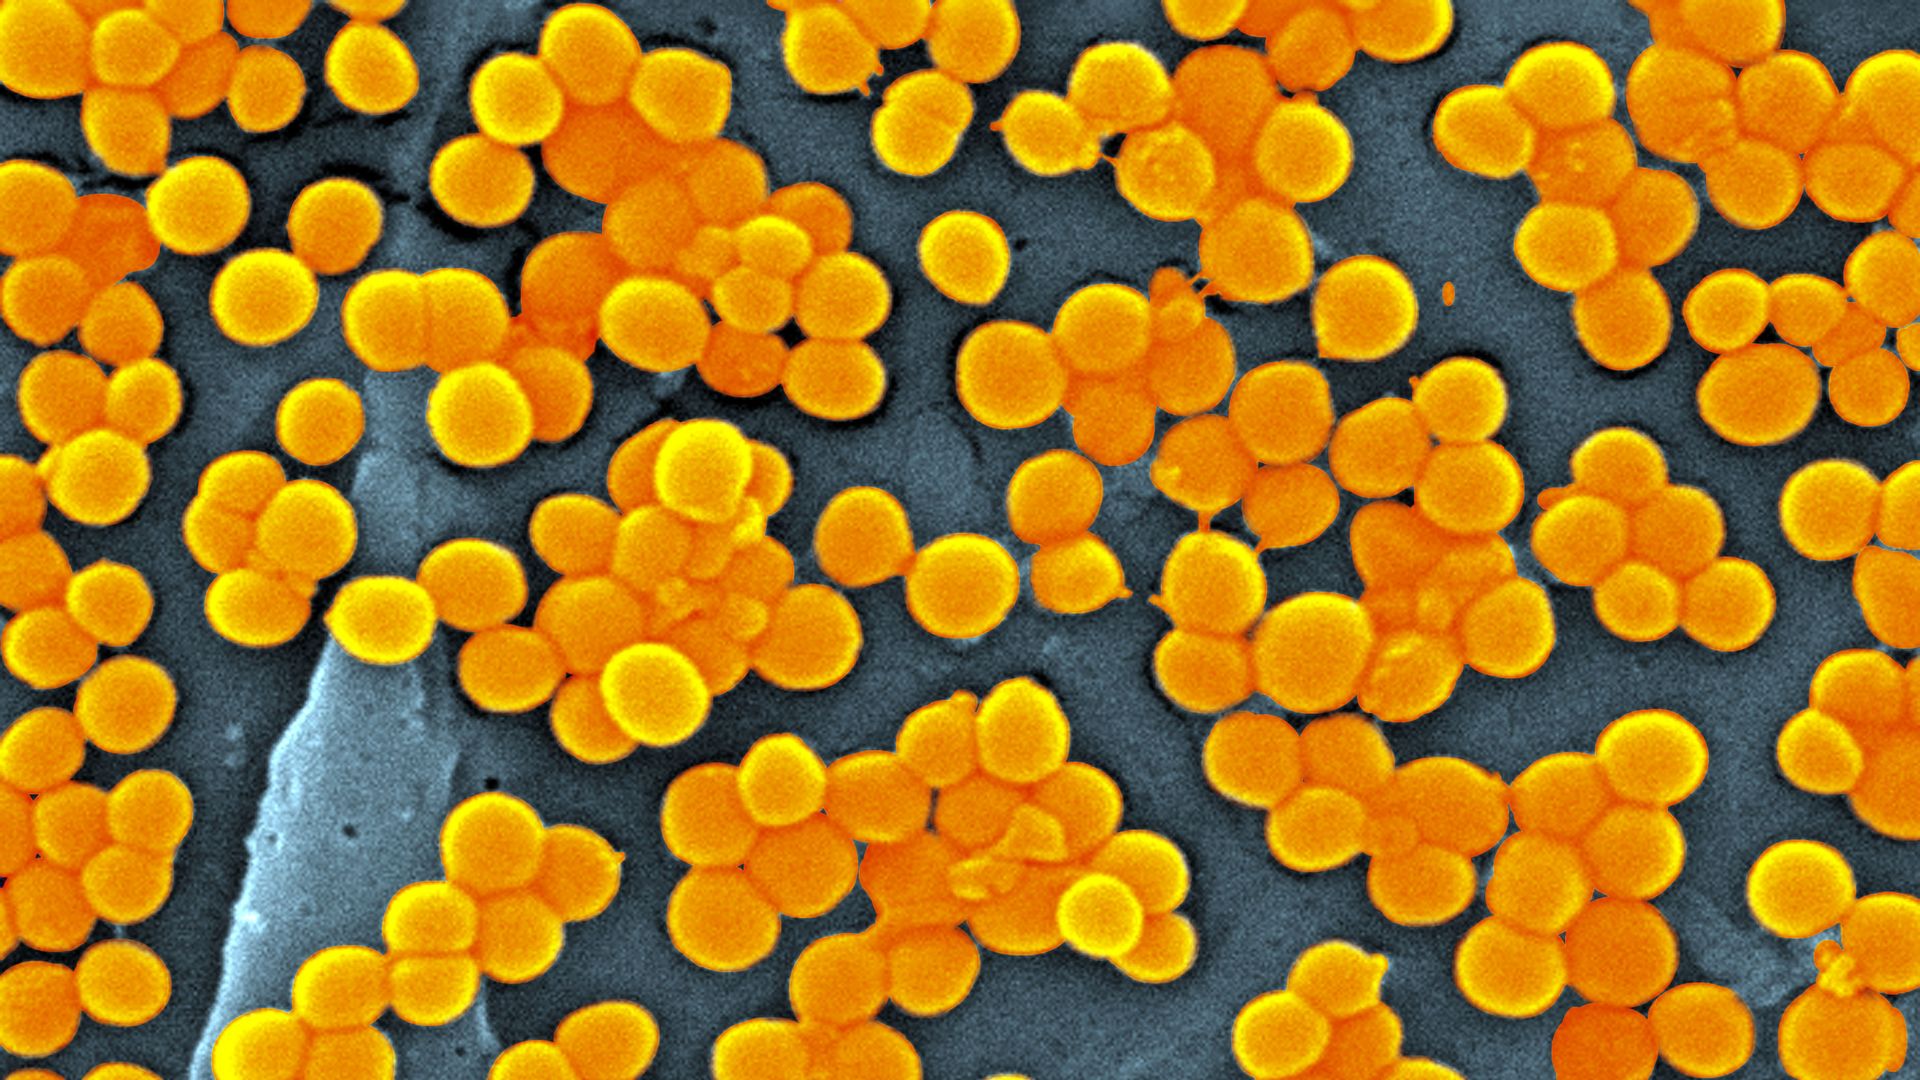 Antibiotic MRSA in a petri dish